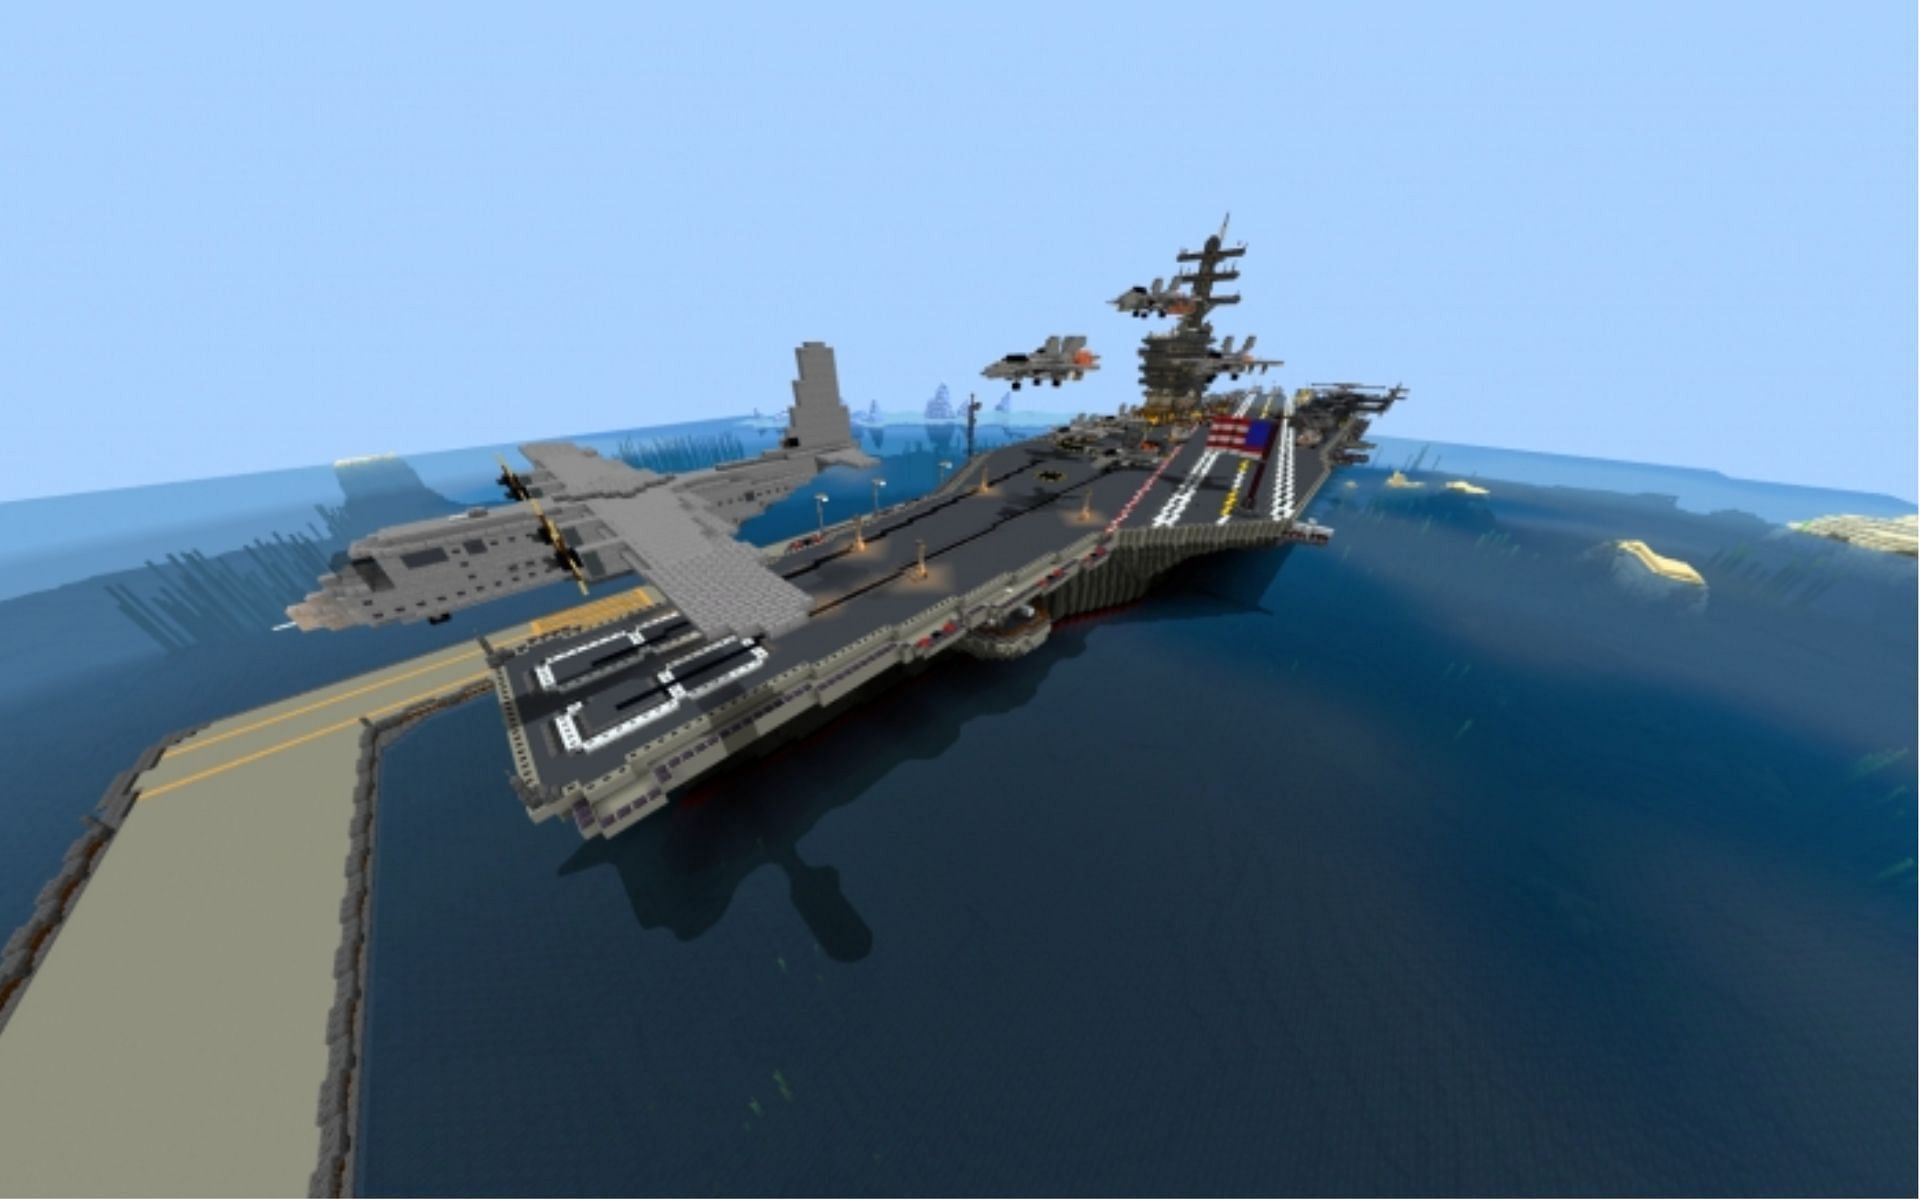 Another shot of the Aircraft Carrier build (Image via reddit/u/nrkheck)